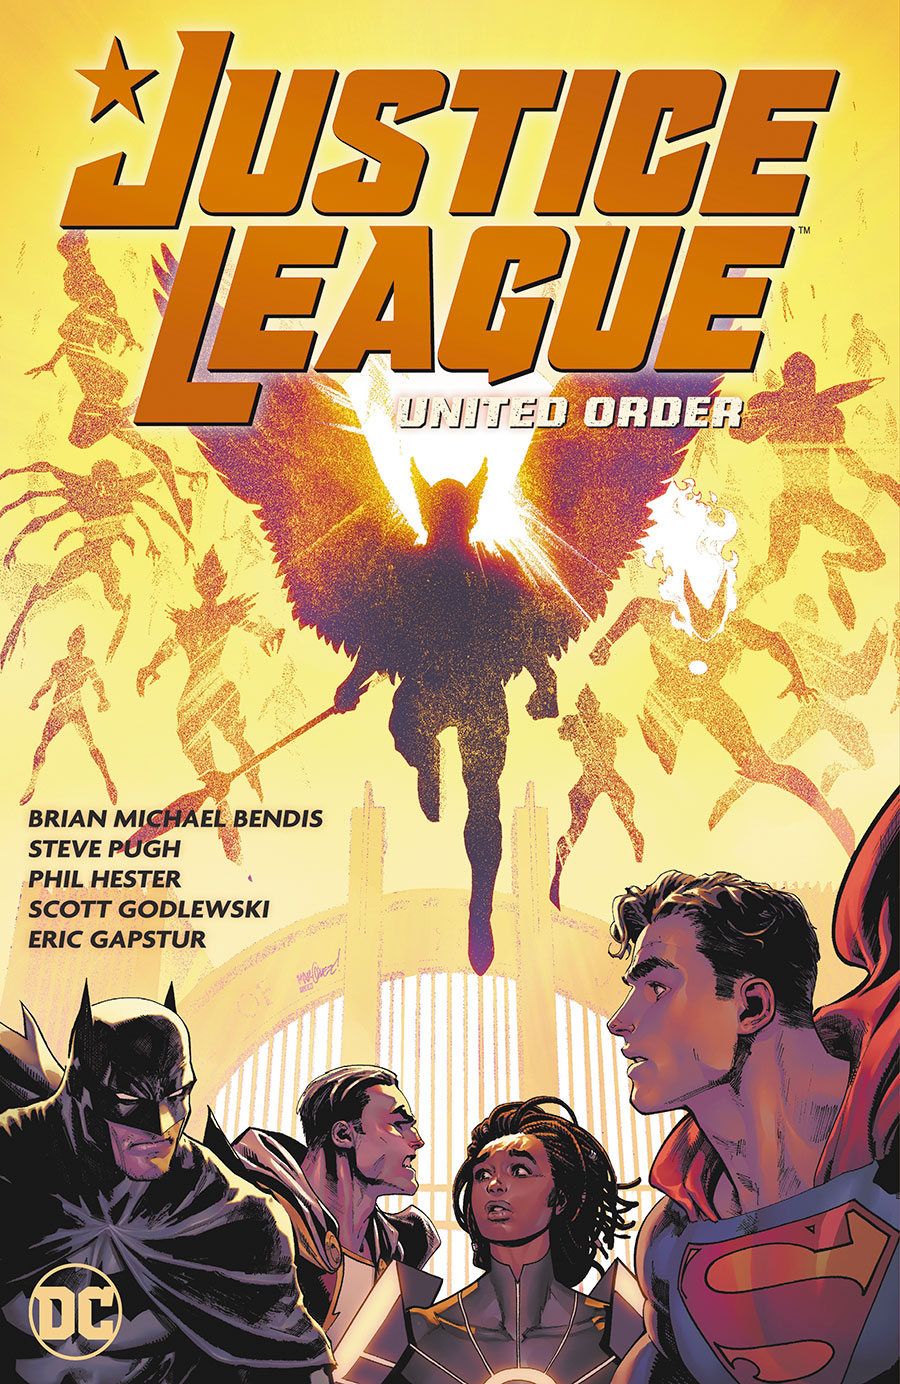 Justice League (2021) Vol 2 United Order TP